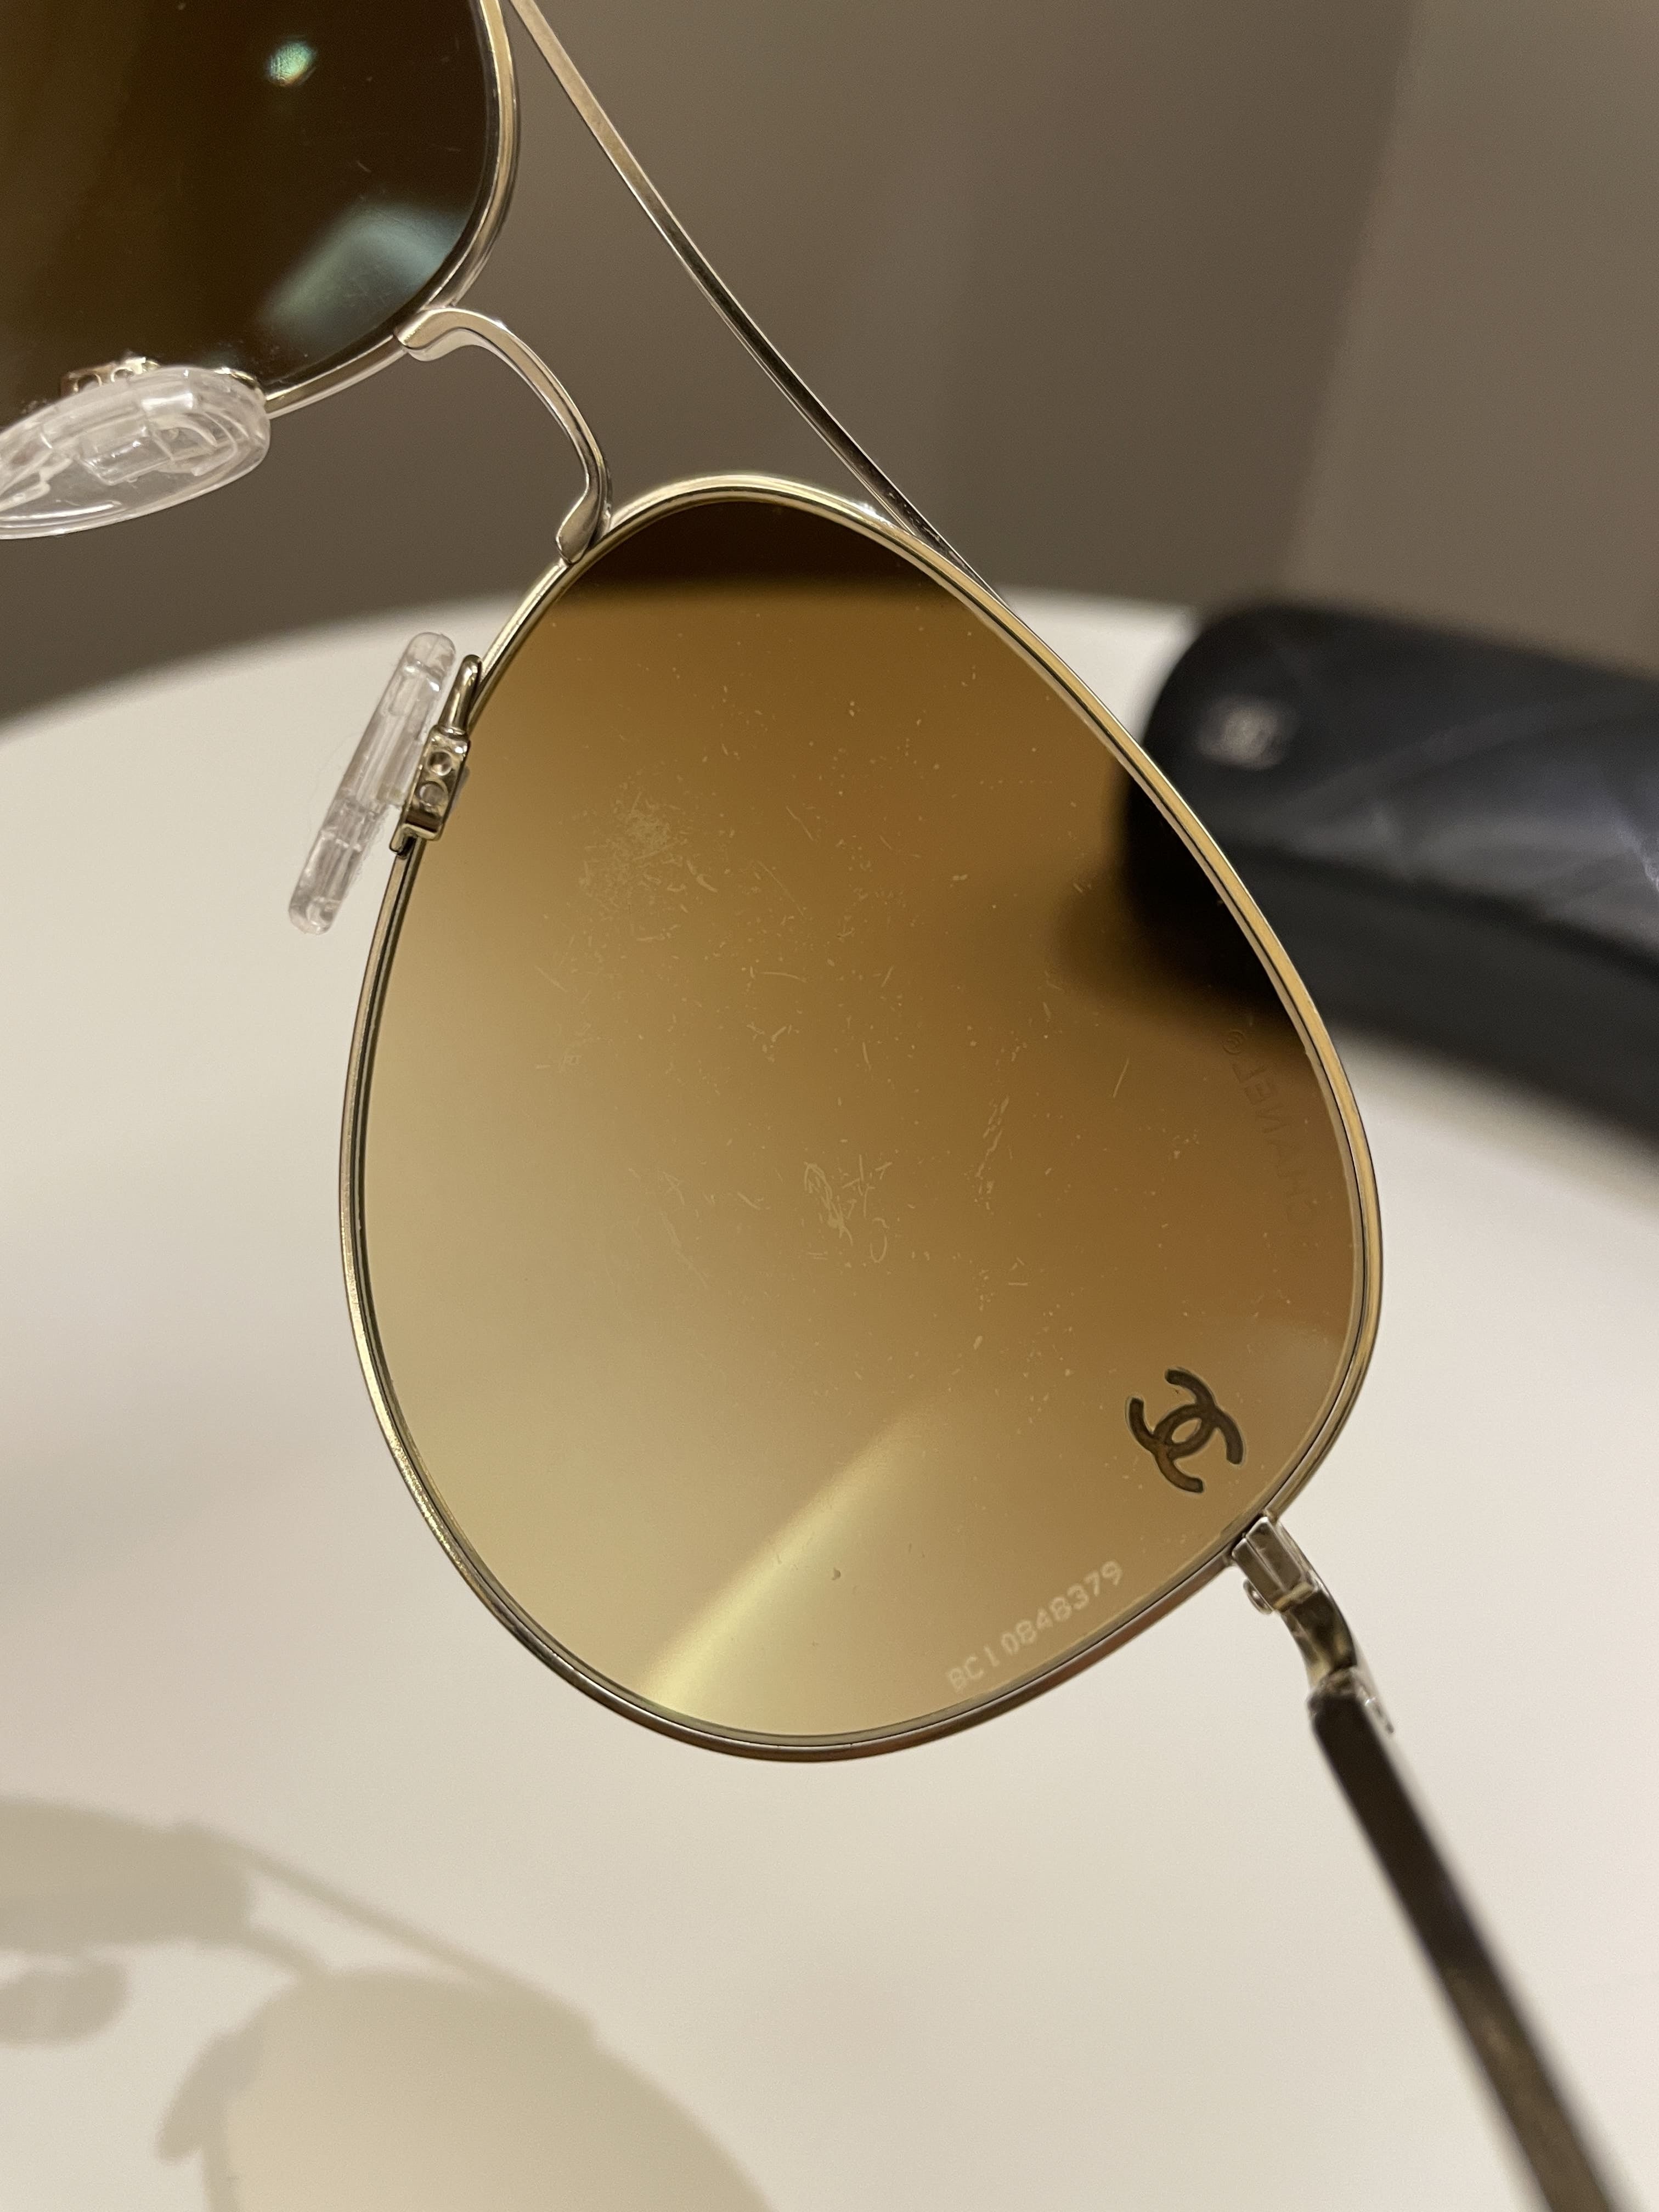 Chanel Aviator Sunglass Gold Framed